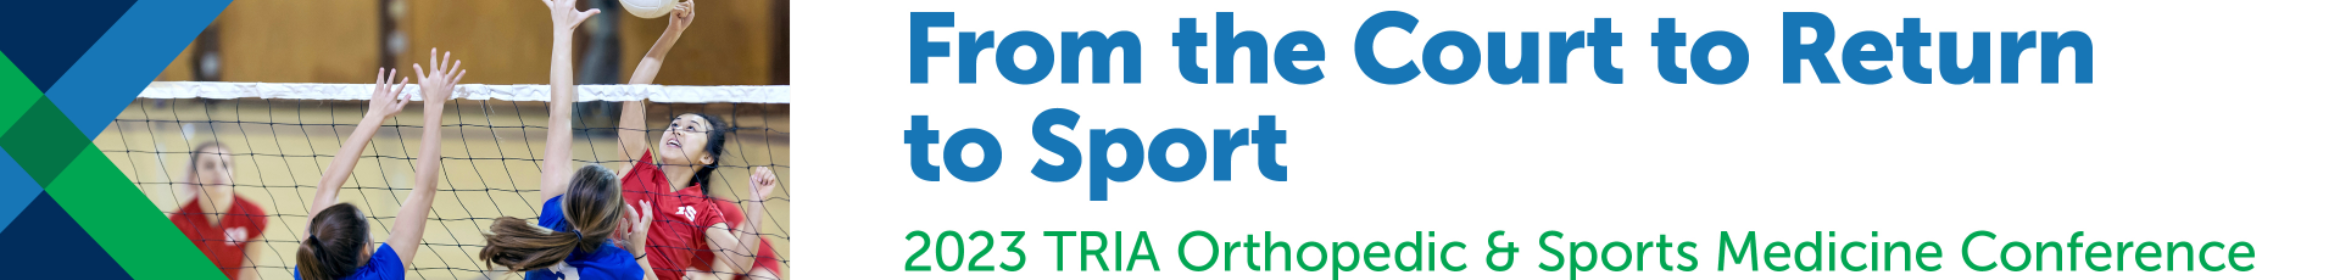 2023 Orthopedic & Sports Medicine Conference Main banner